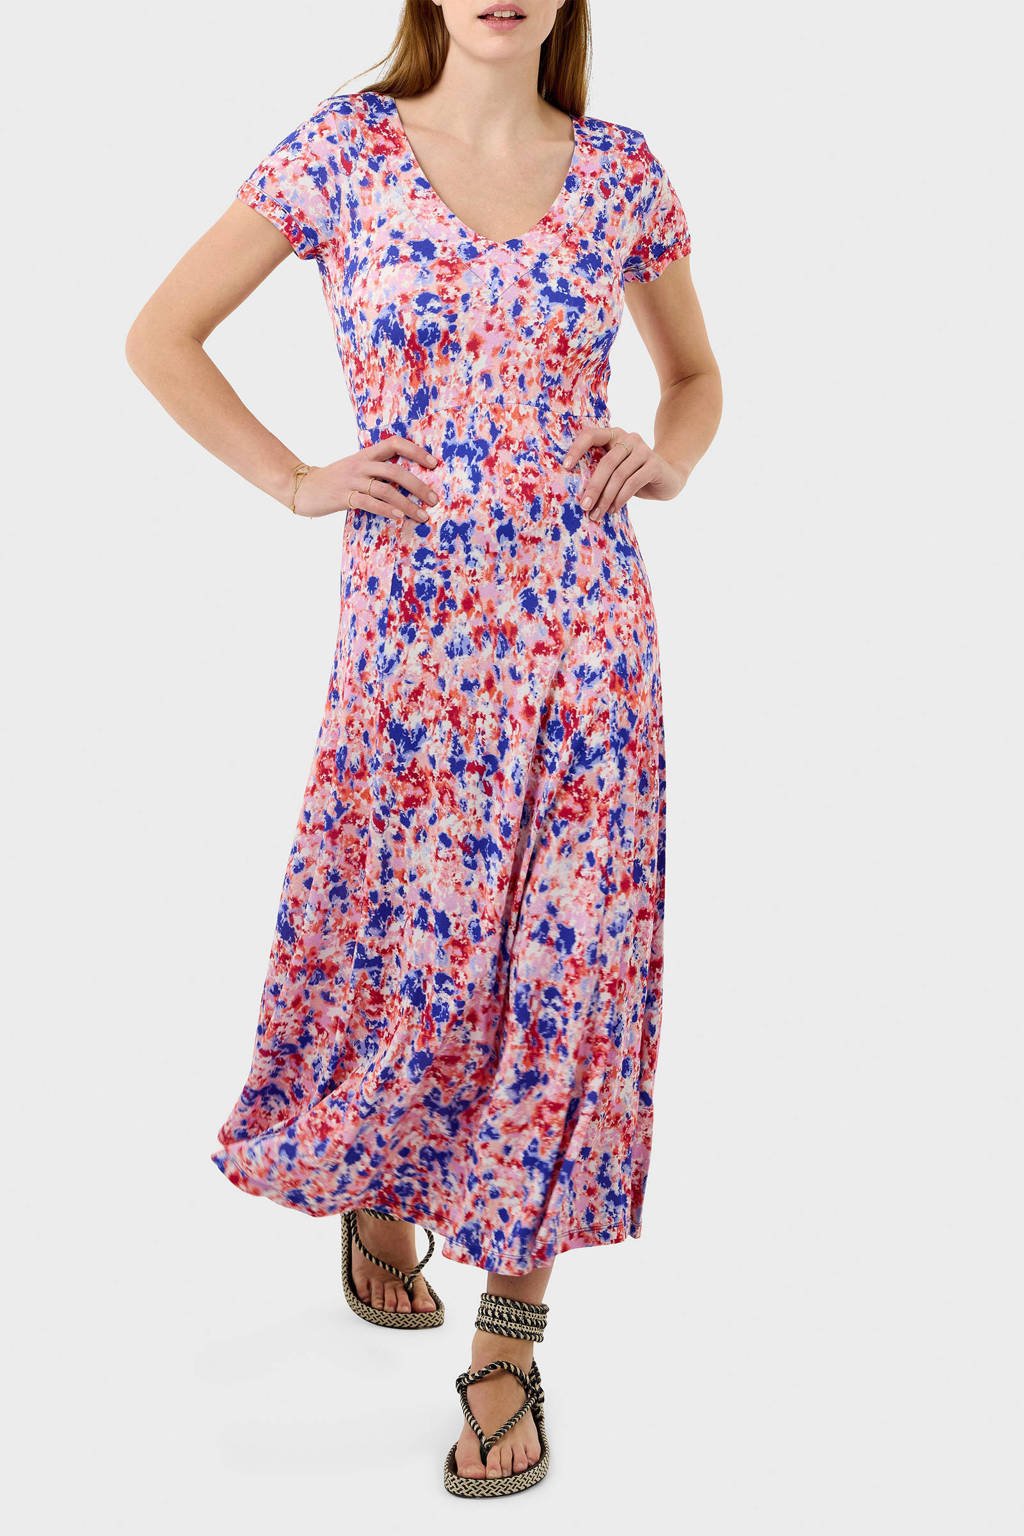 Sandwich jurk met all print roze/blauw/rood wehkamp